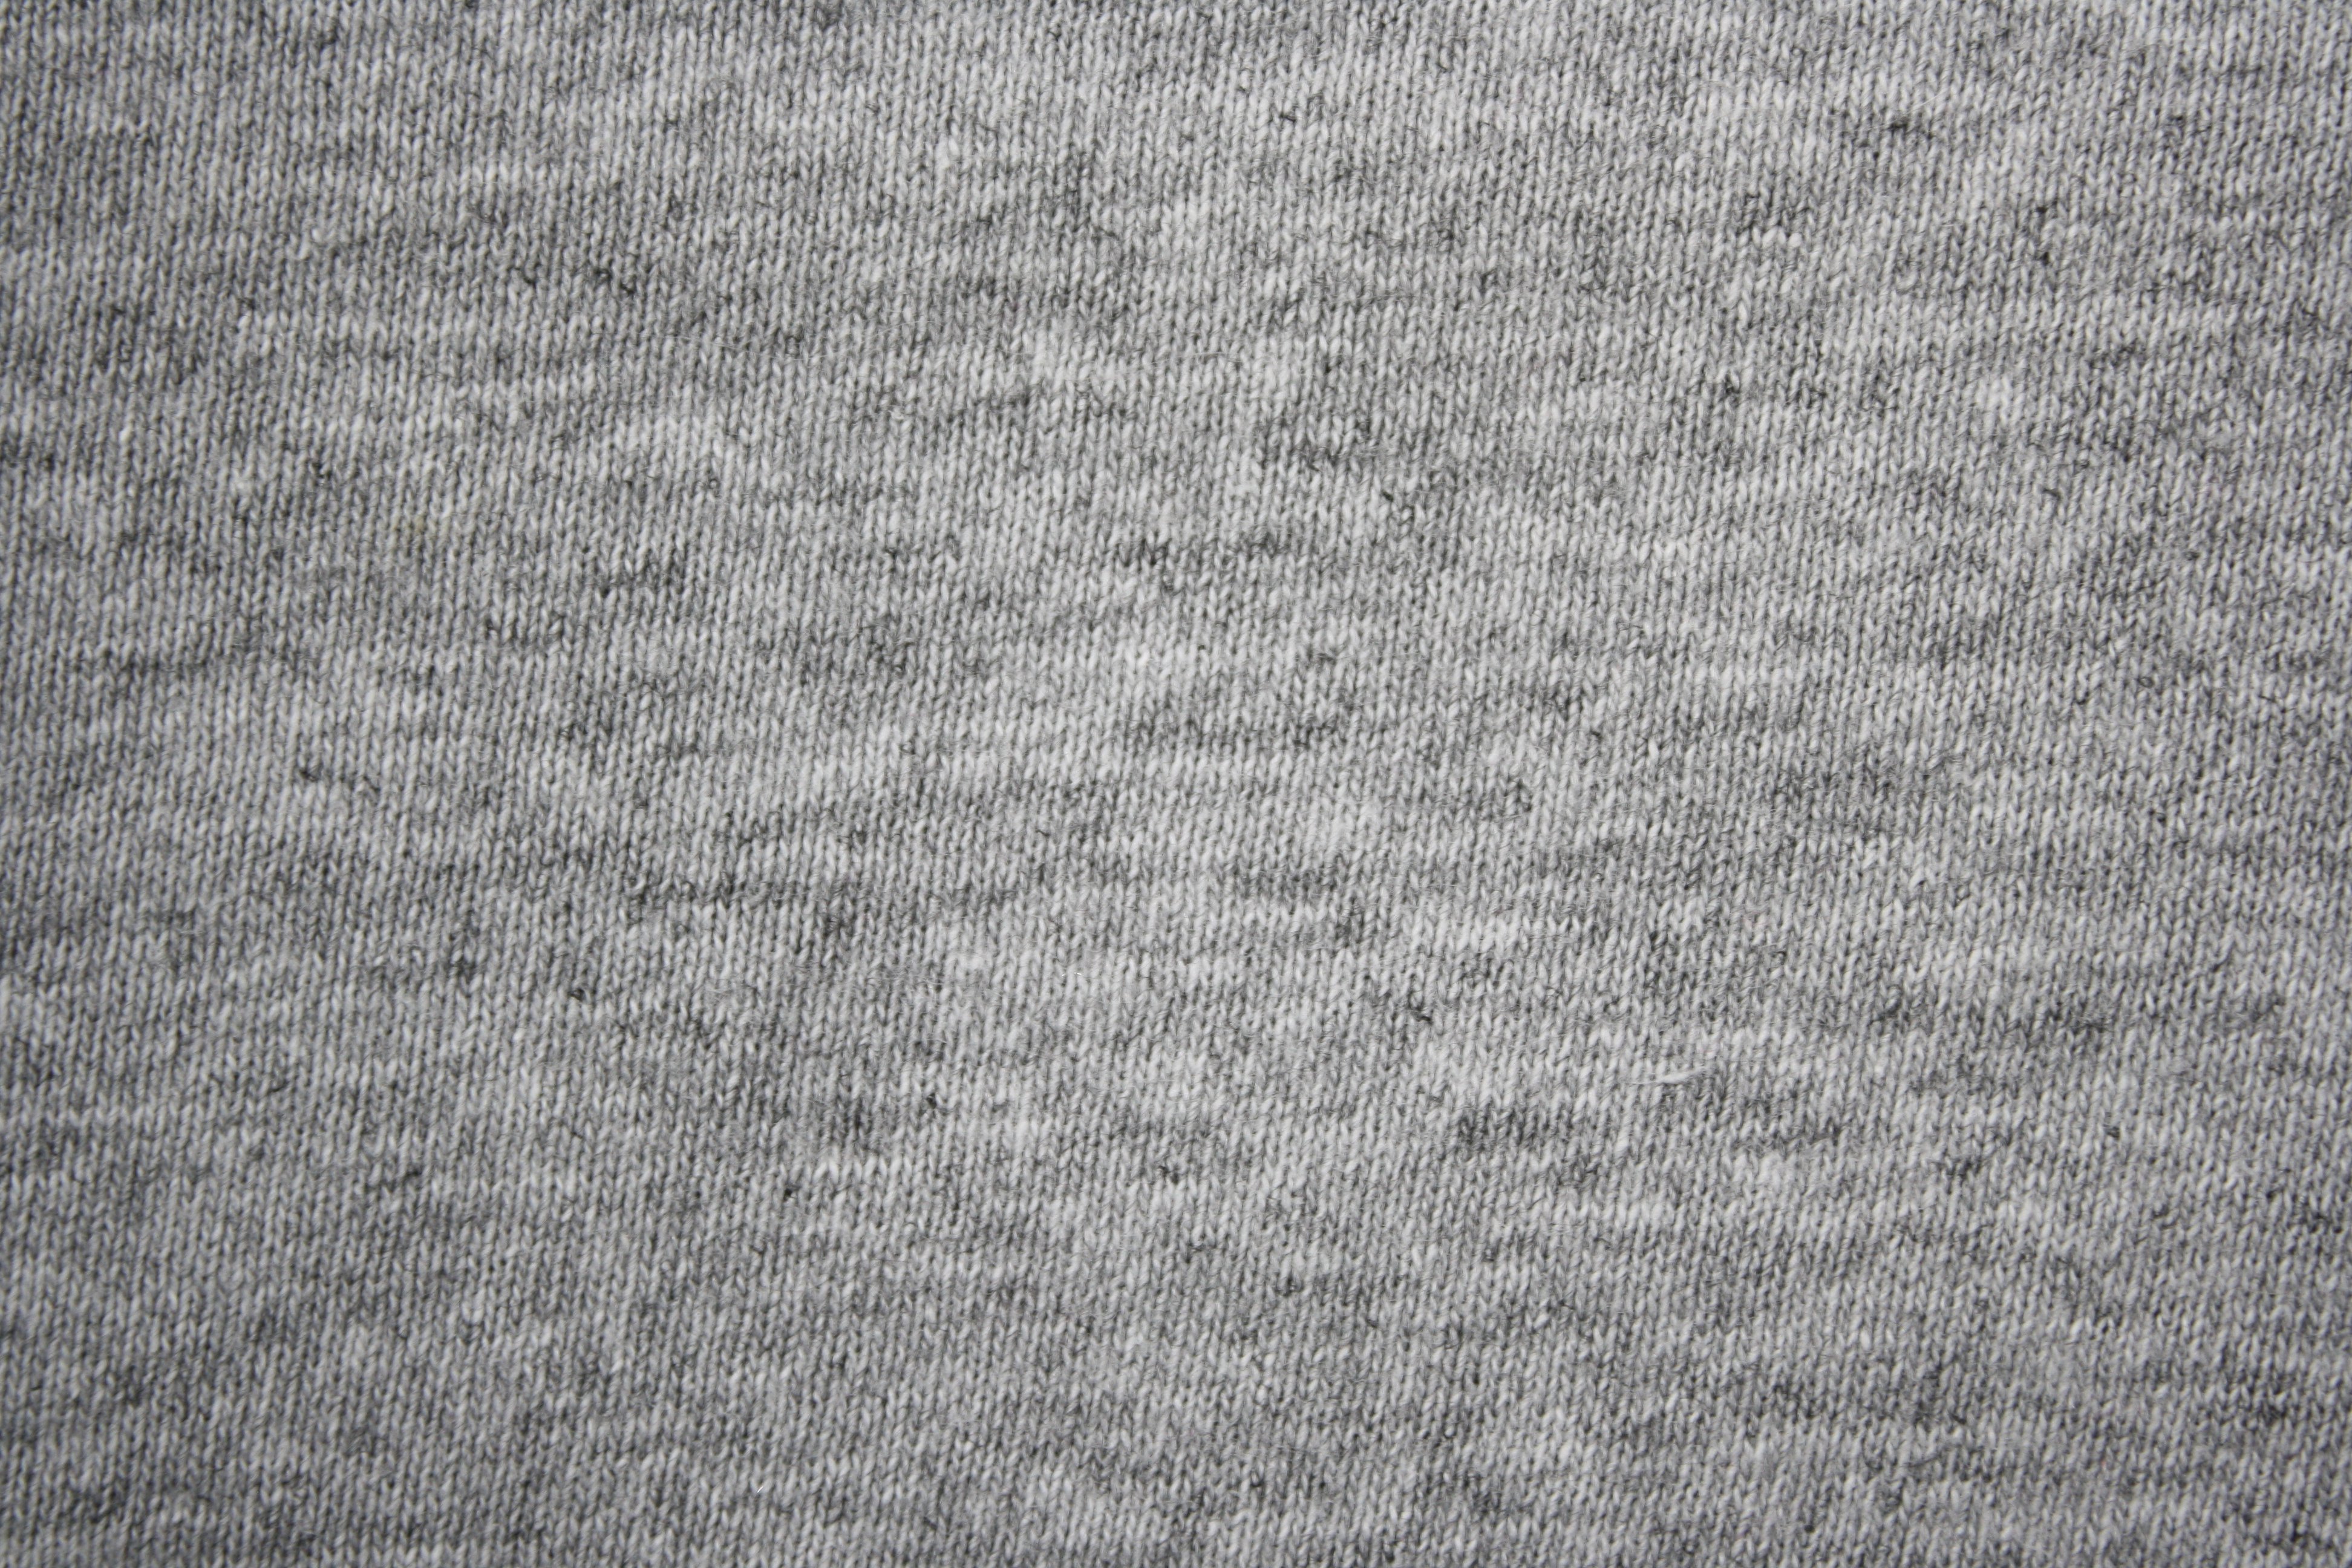 Cotton Shirt Texture